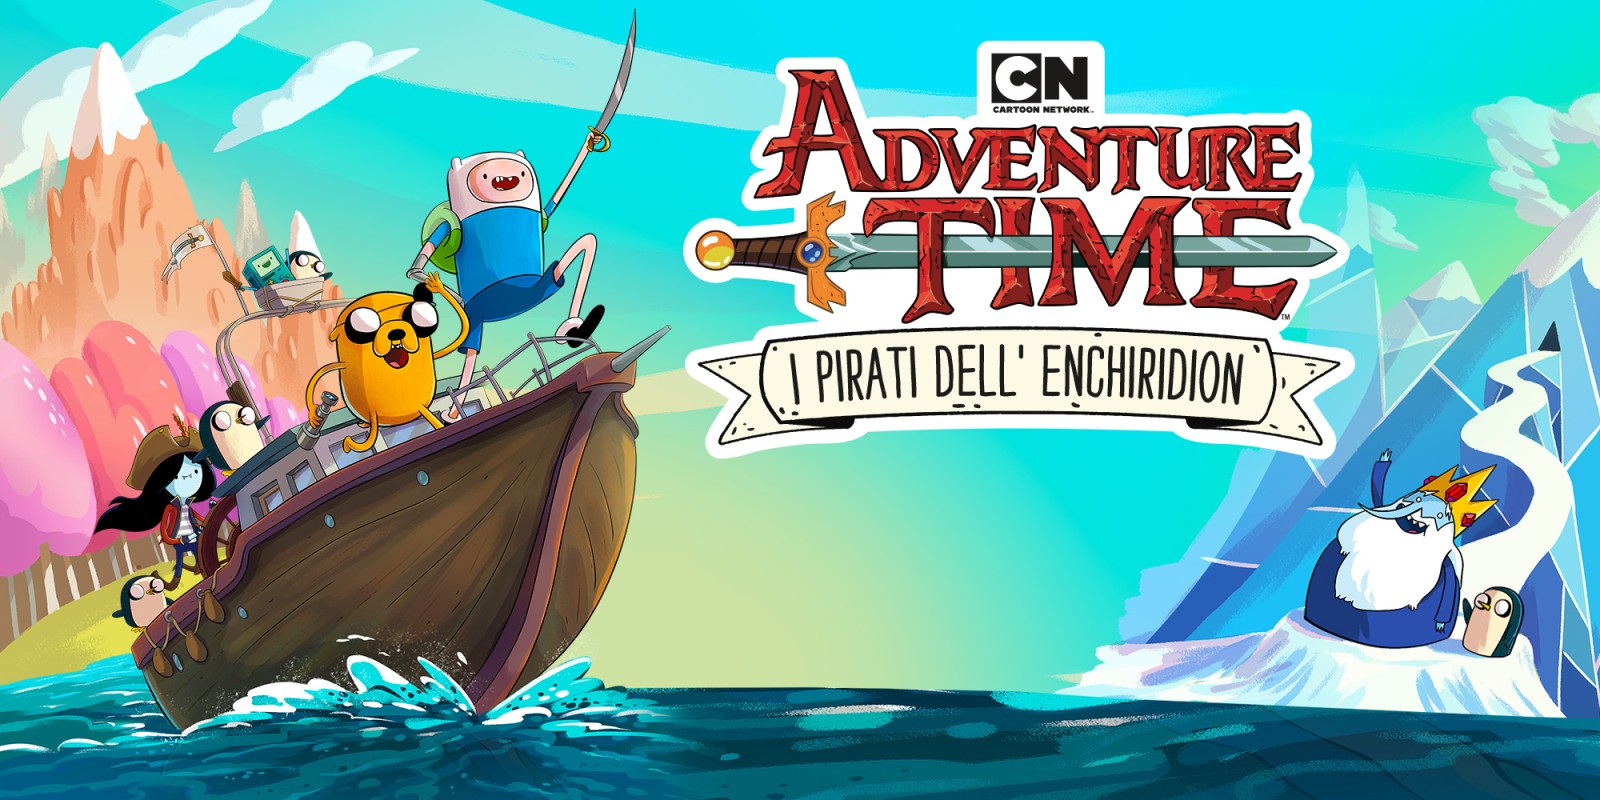 Cartoon Network Adventure Time: I Pirati dell' Enchiridion